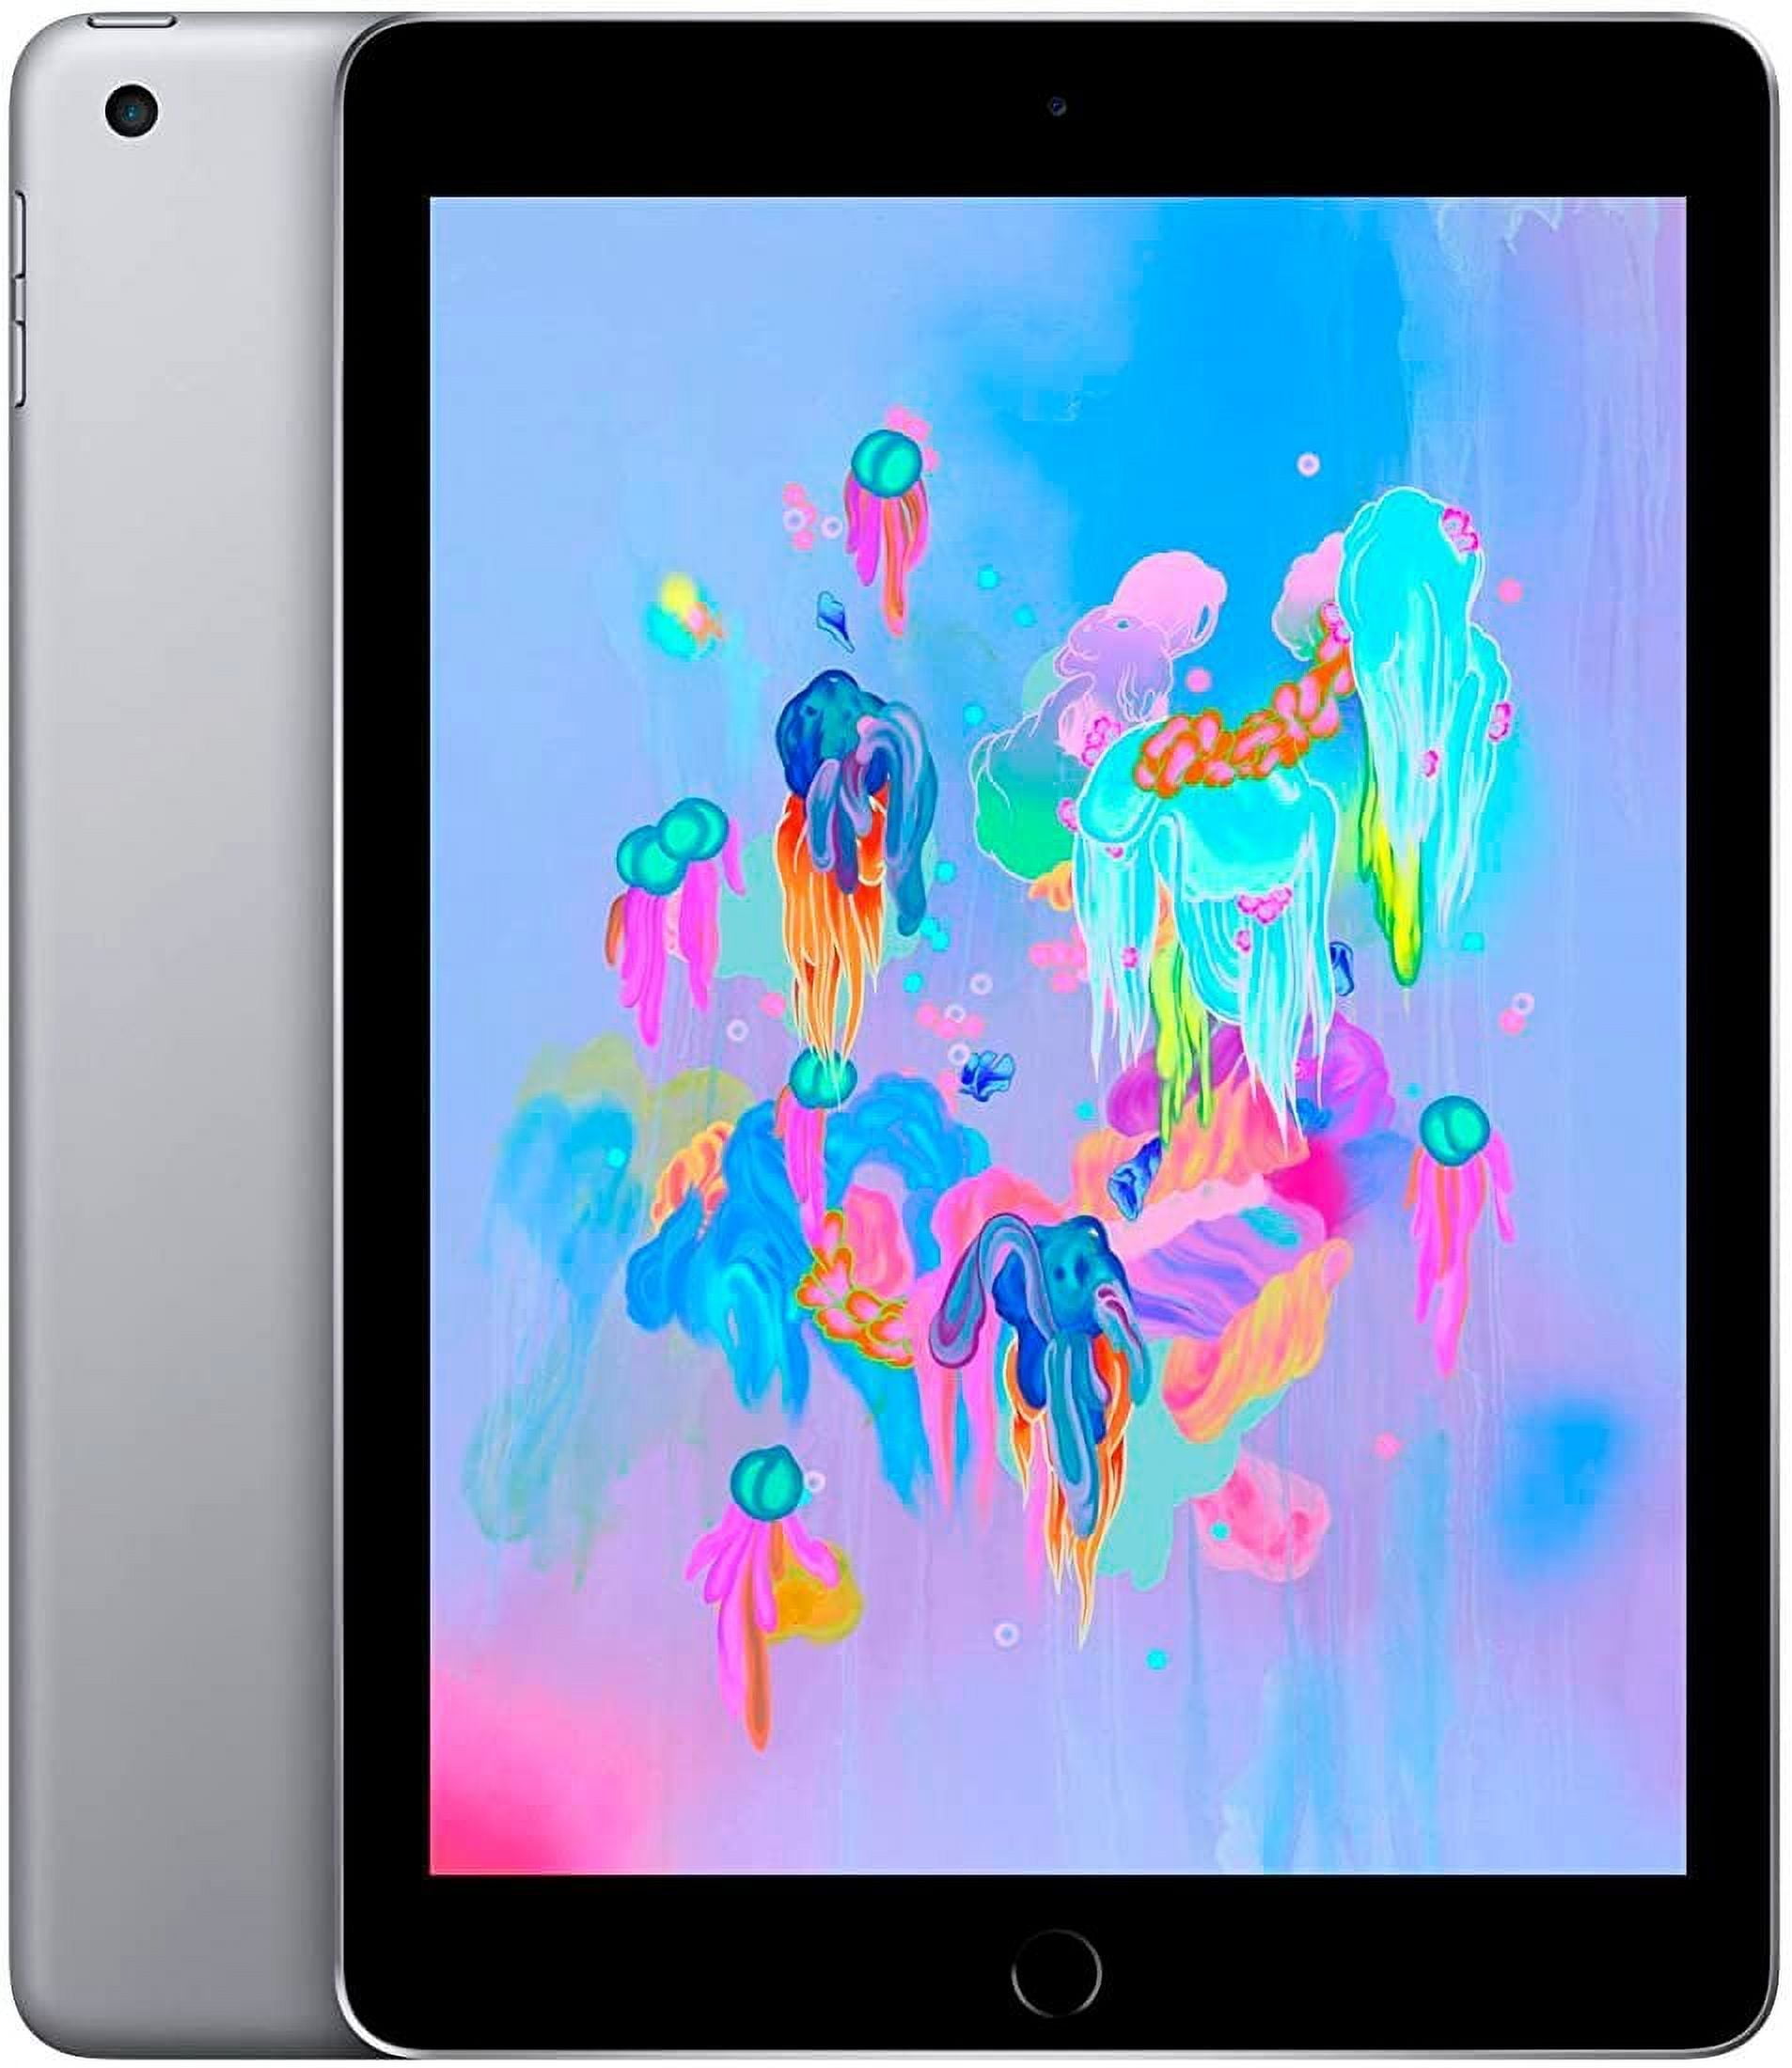 REACONDICIONADO C: Tablet - APPLE iPad (2019 7ª gen), Wifi + Cell, Gris  Espacial, 32 GB, WiFi+CELL, 10,2 , 32 GB RAM, Chip A10 Fusion, iOS